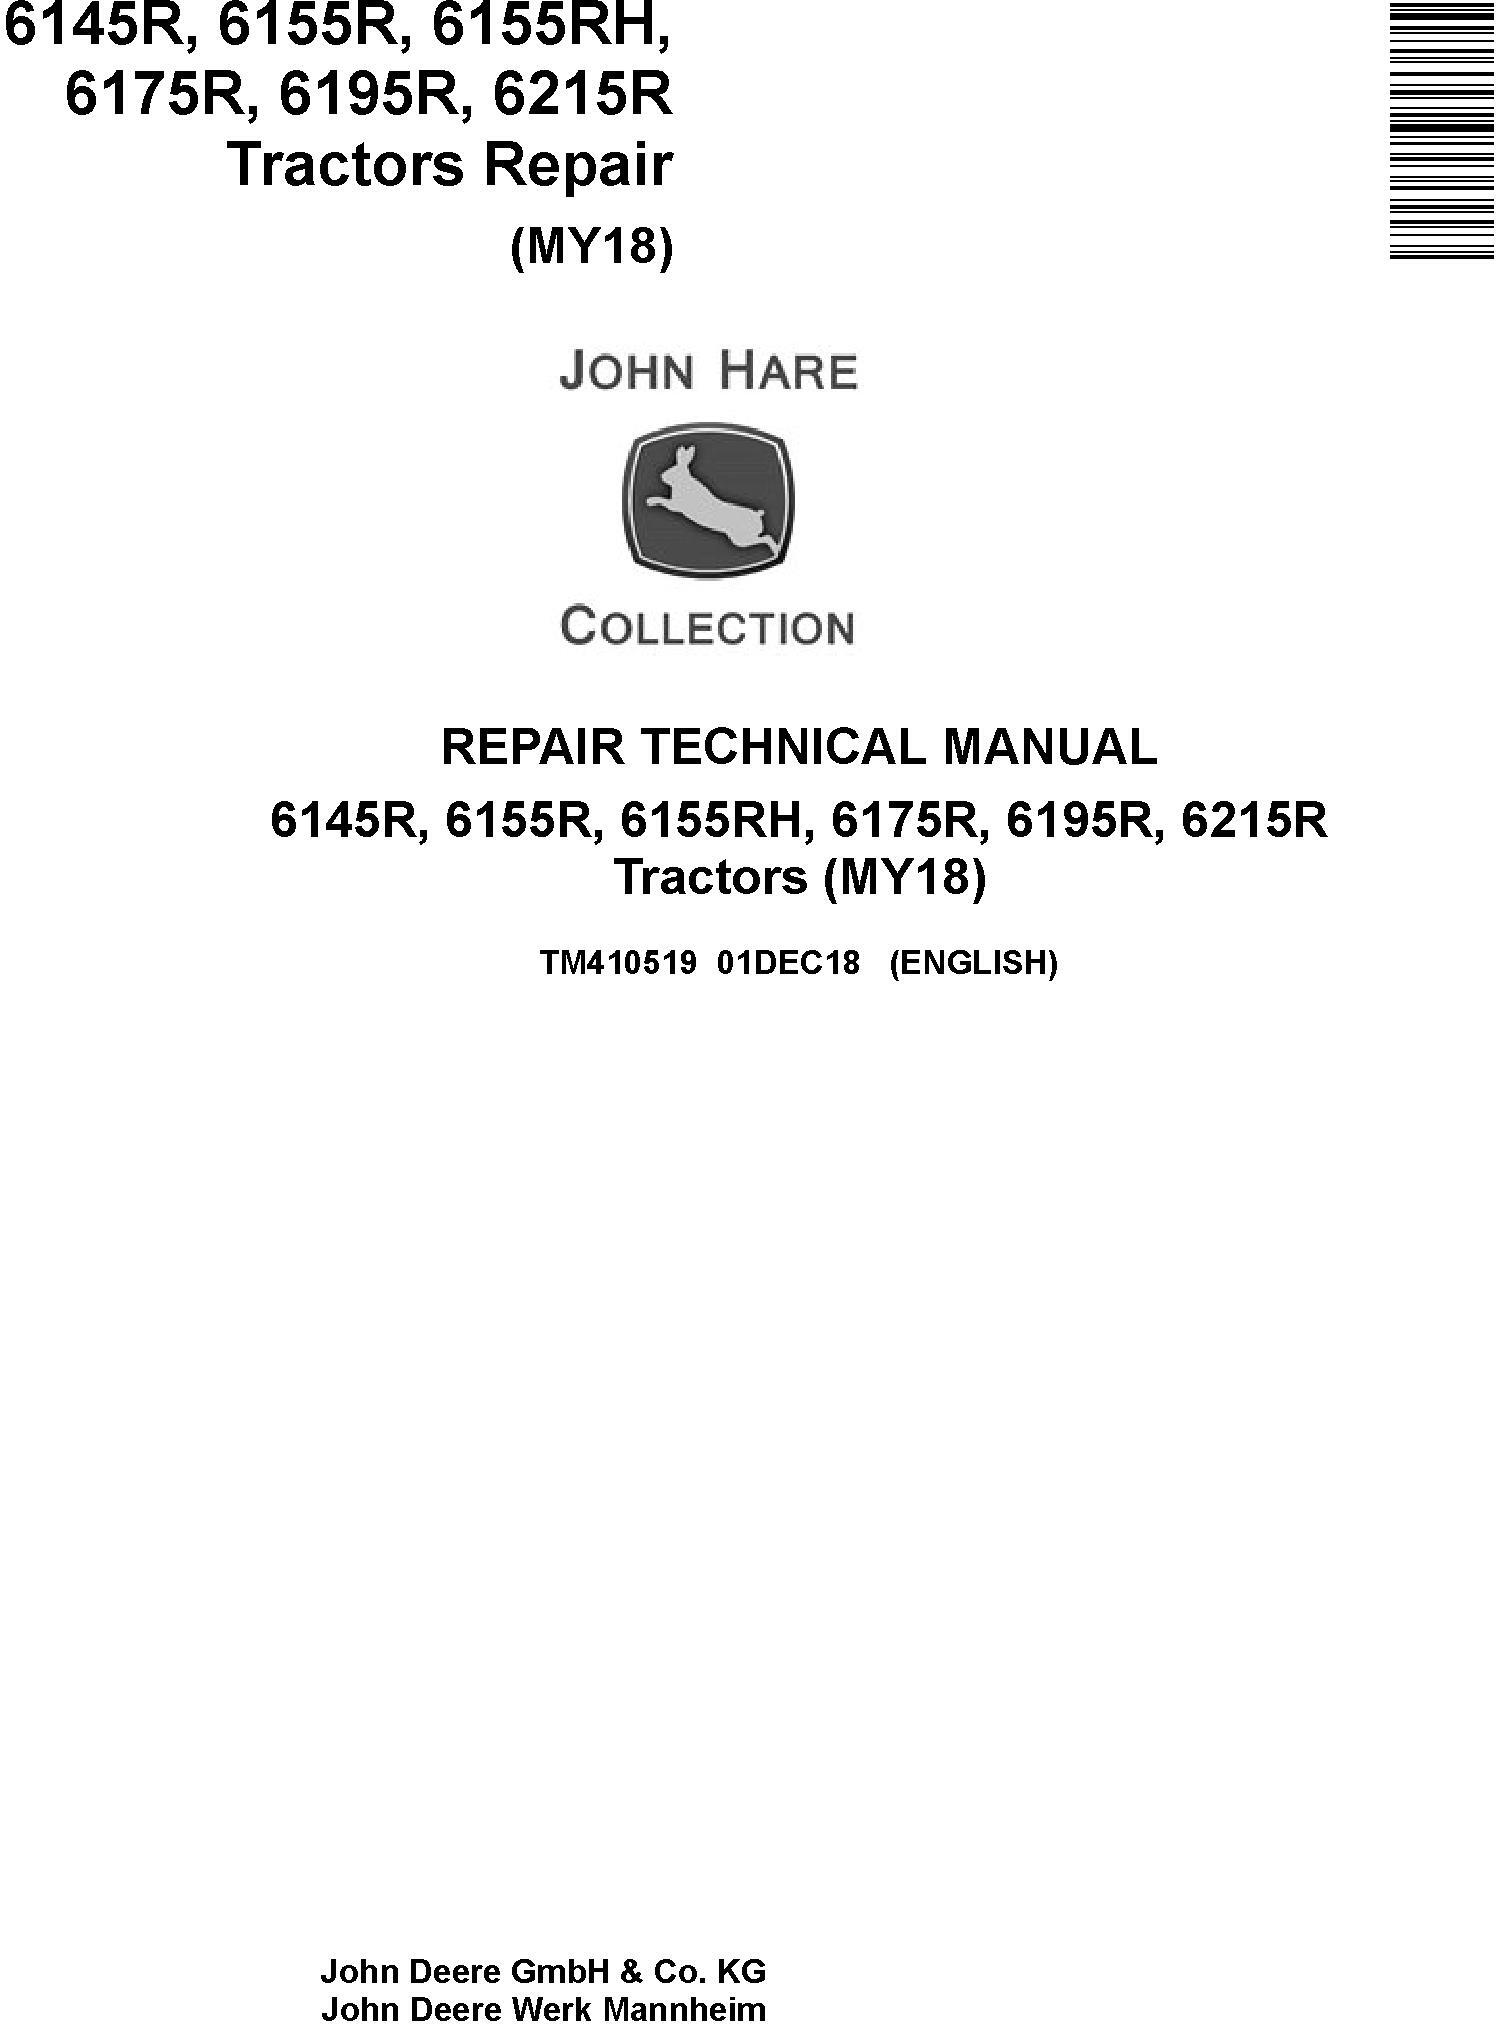 John Deere 6145R, 6155R, 6155RH, 6175R, 6195R, 6215R MY18 Tractor Repair Technical Manual (TM410519) - 19134